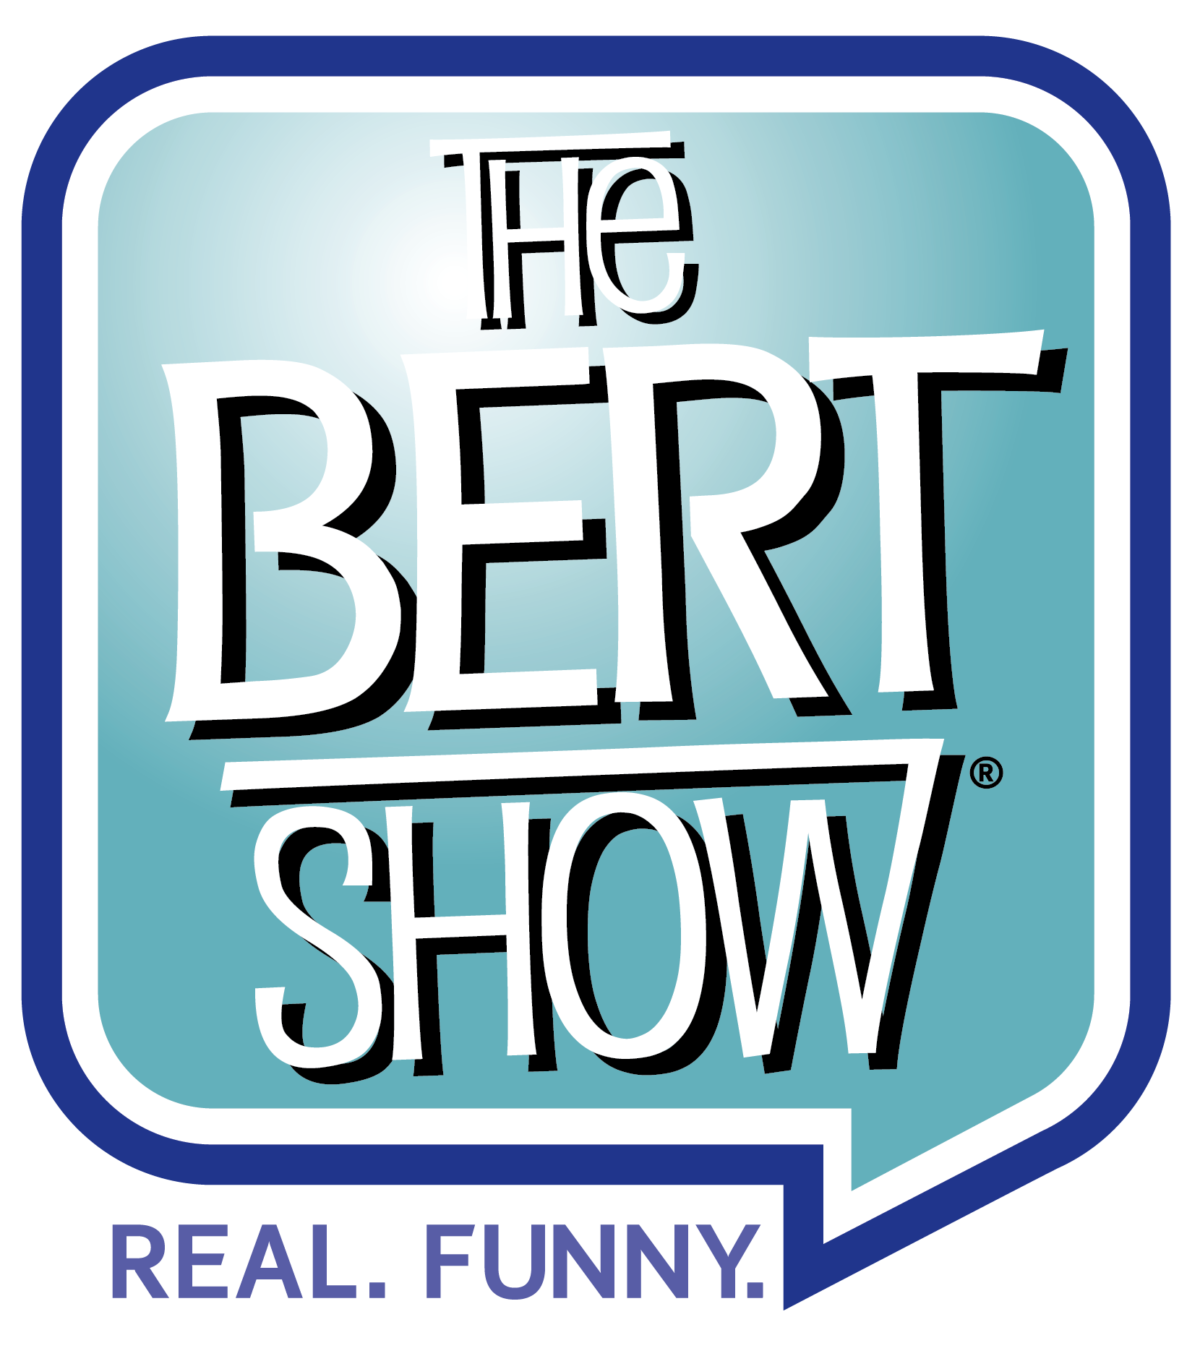 The Bert Show Contact